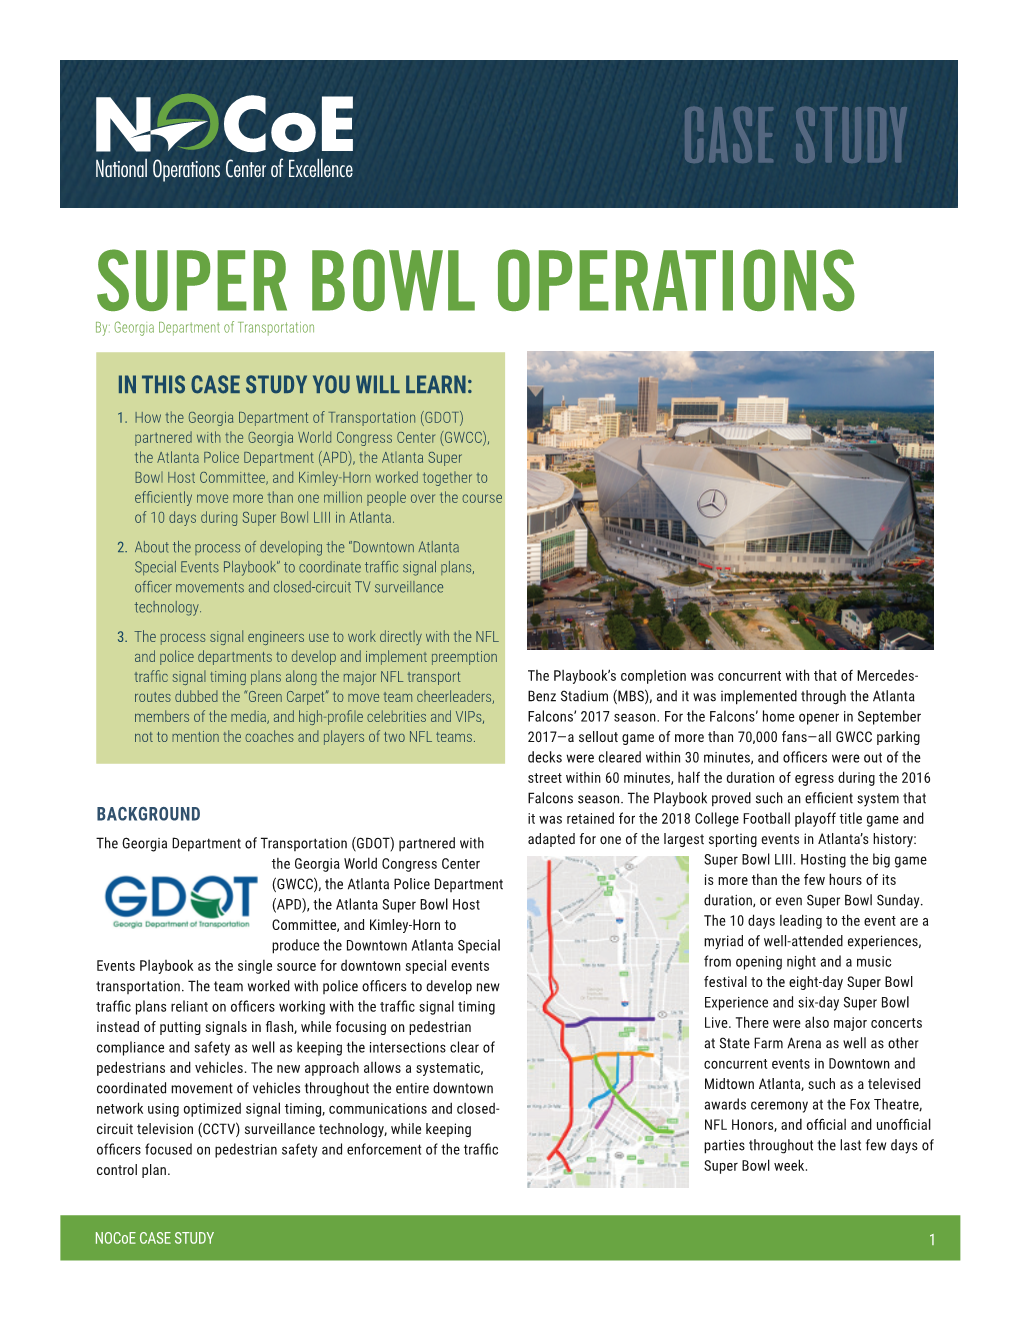 GDOT-Super Bowl Operations-Case Study.Indd